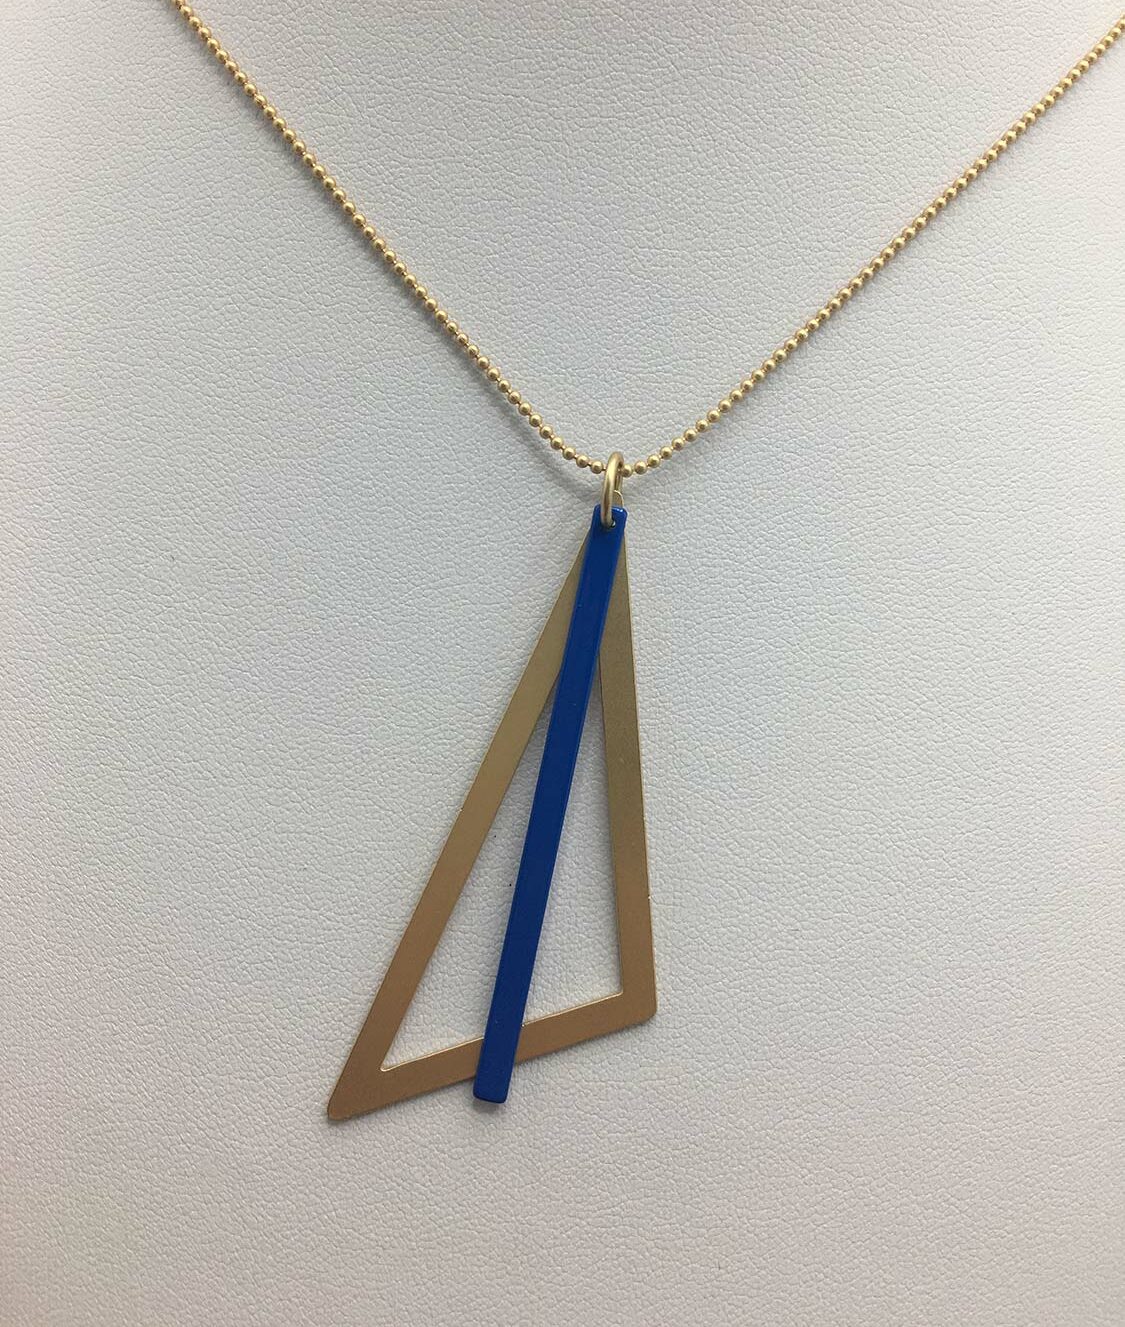 wolfkat ketting geometrics driehoek goud staafje blauw